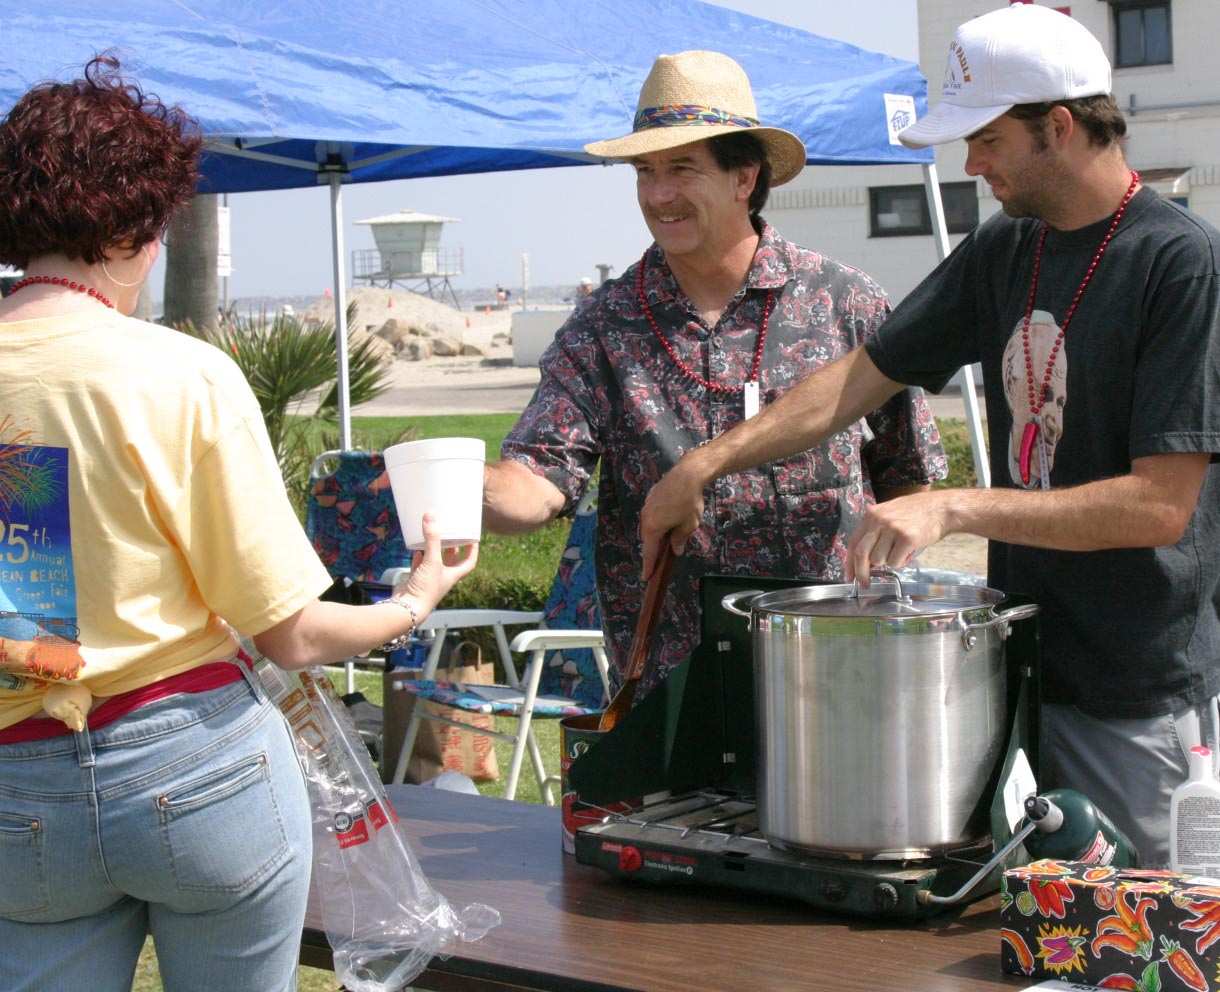 OB Street Fair & Chili Cook-Off 2005